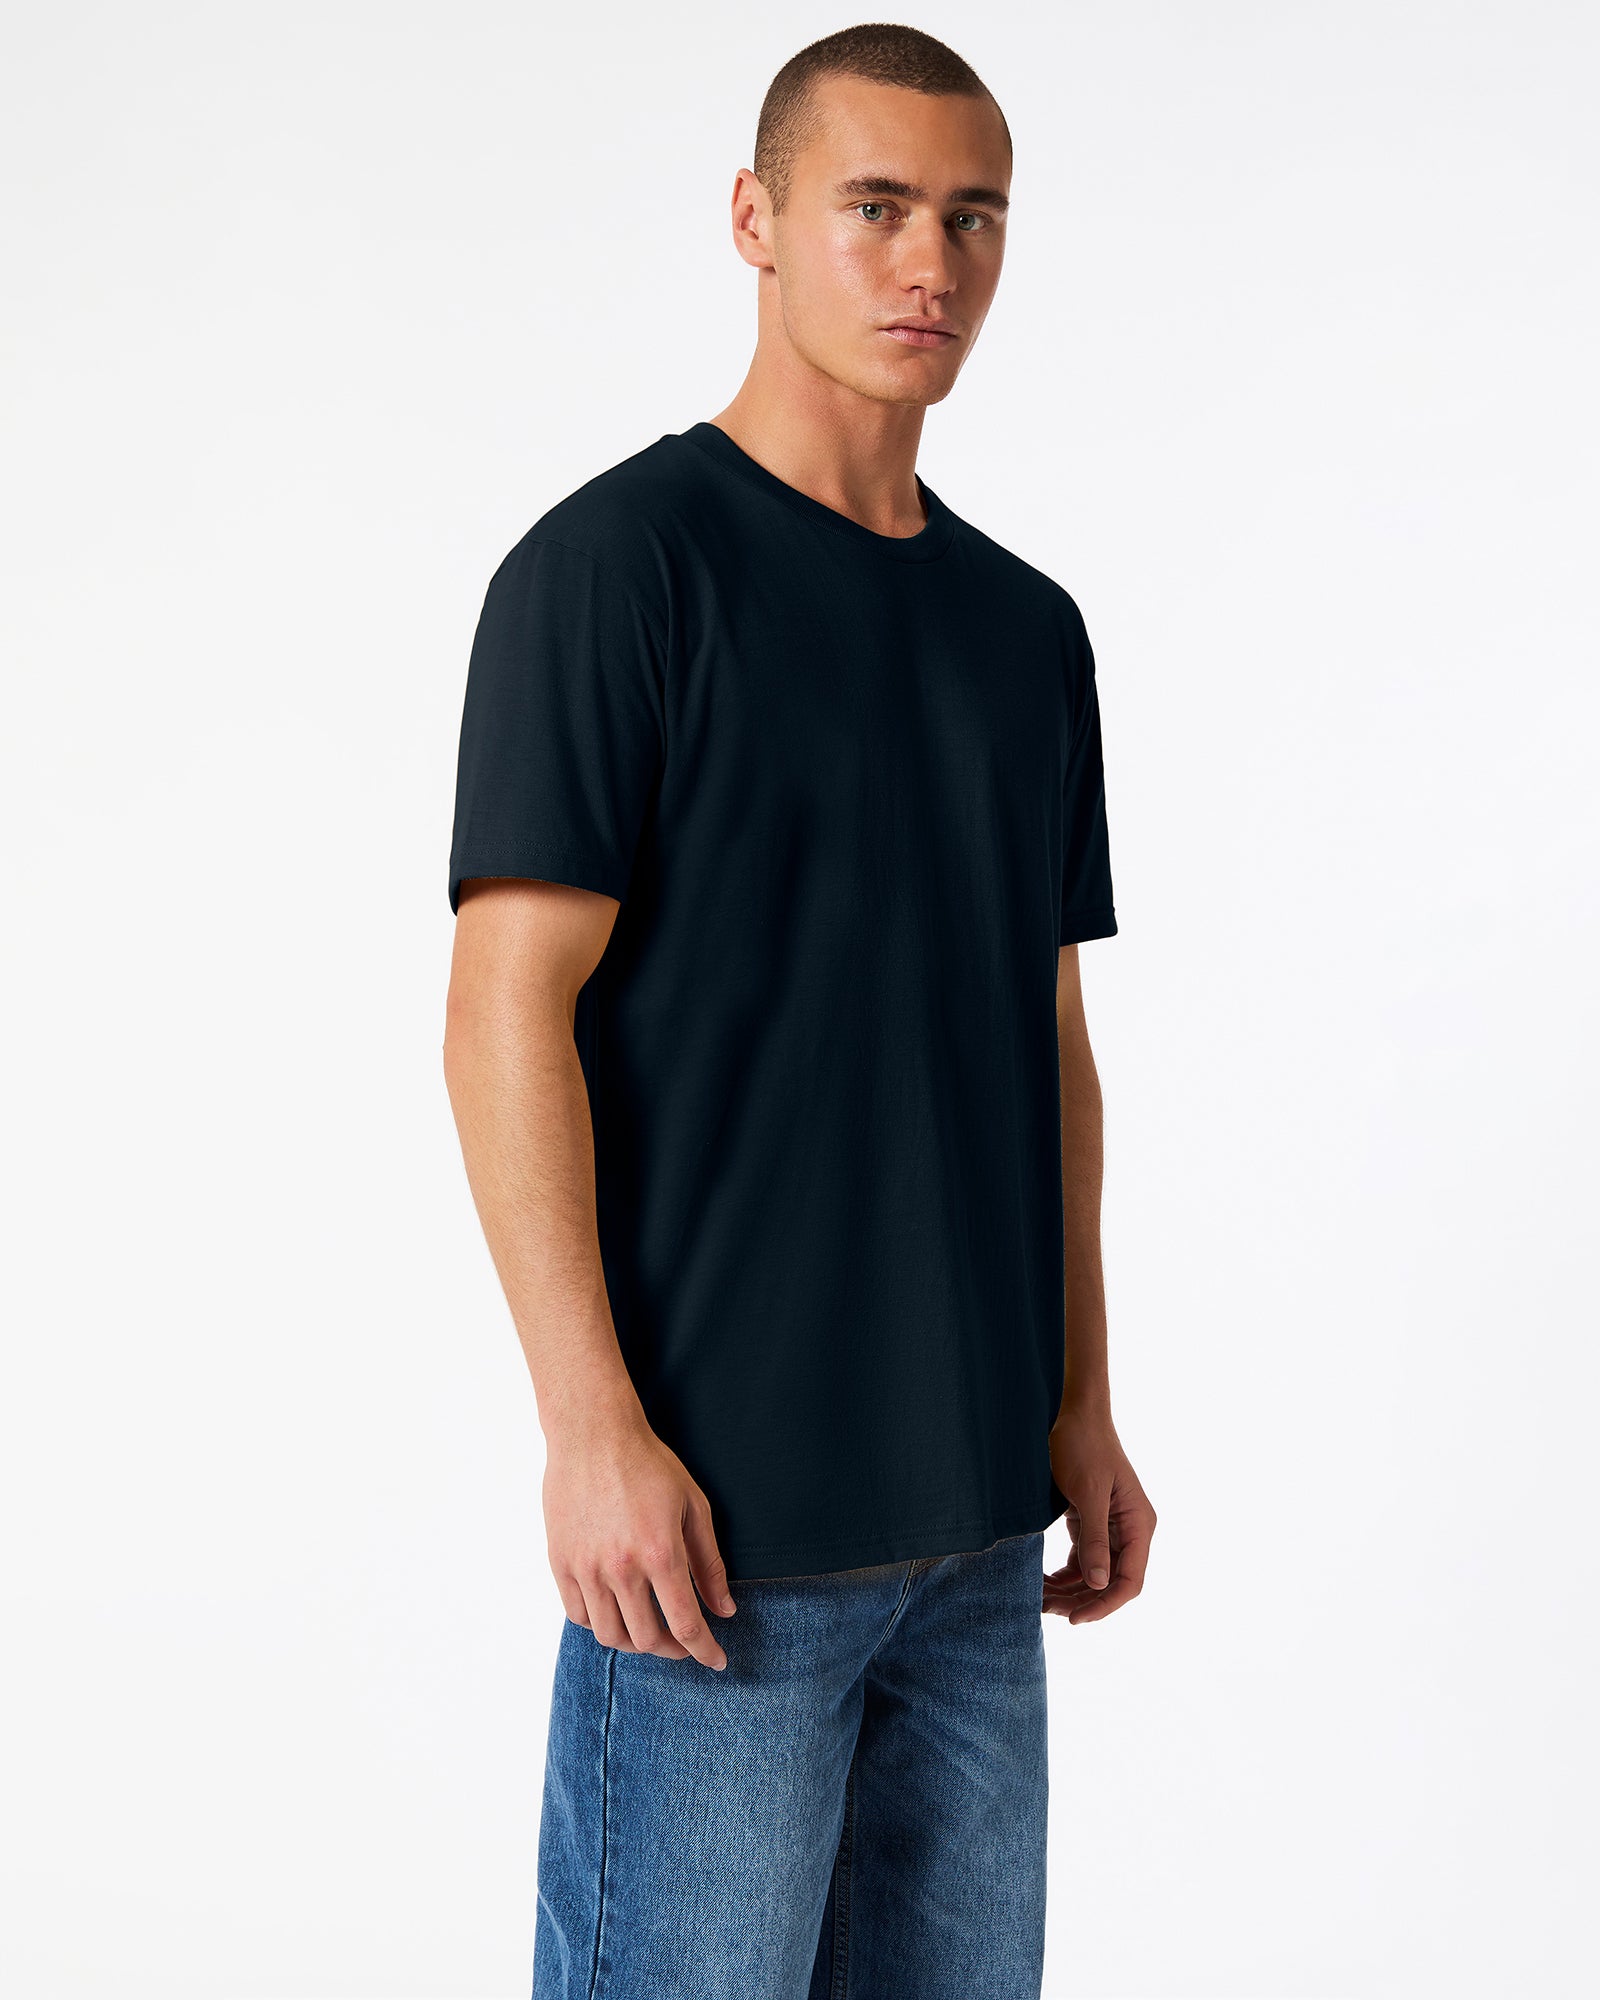 CVC Unisex Short Sleeve T-Shirt - Black